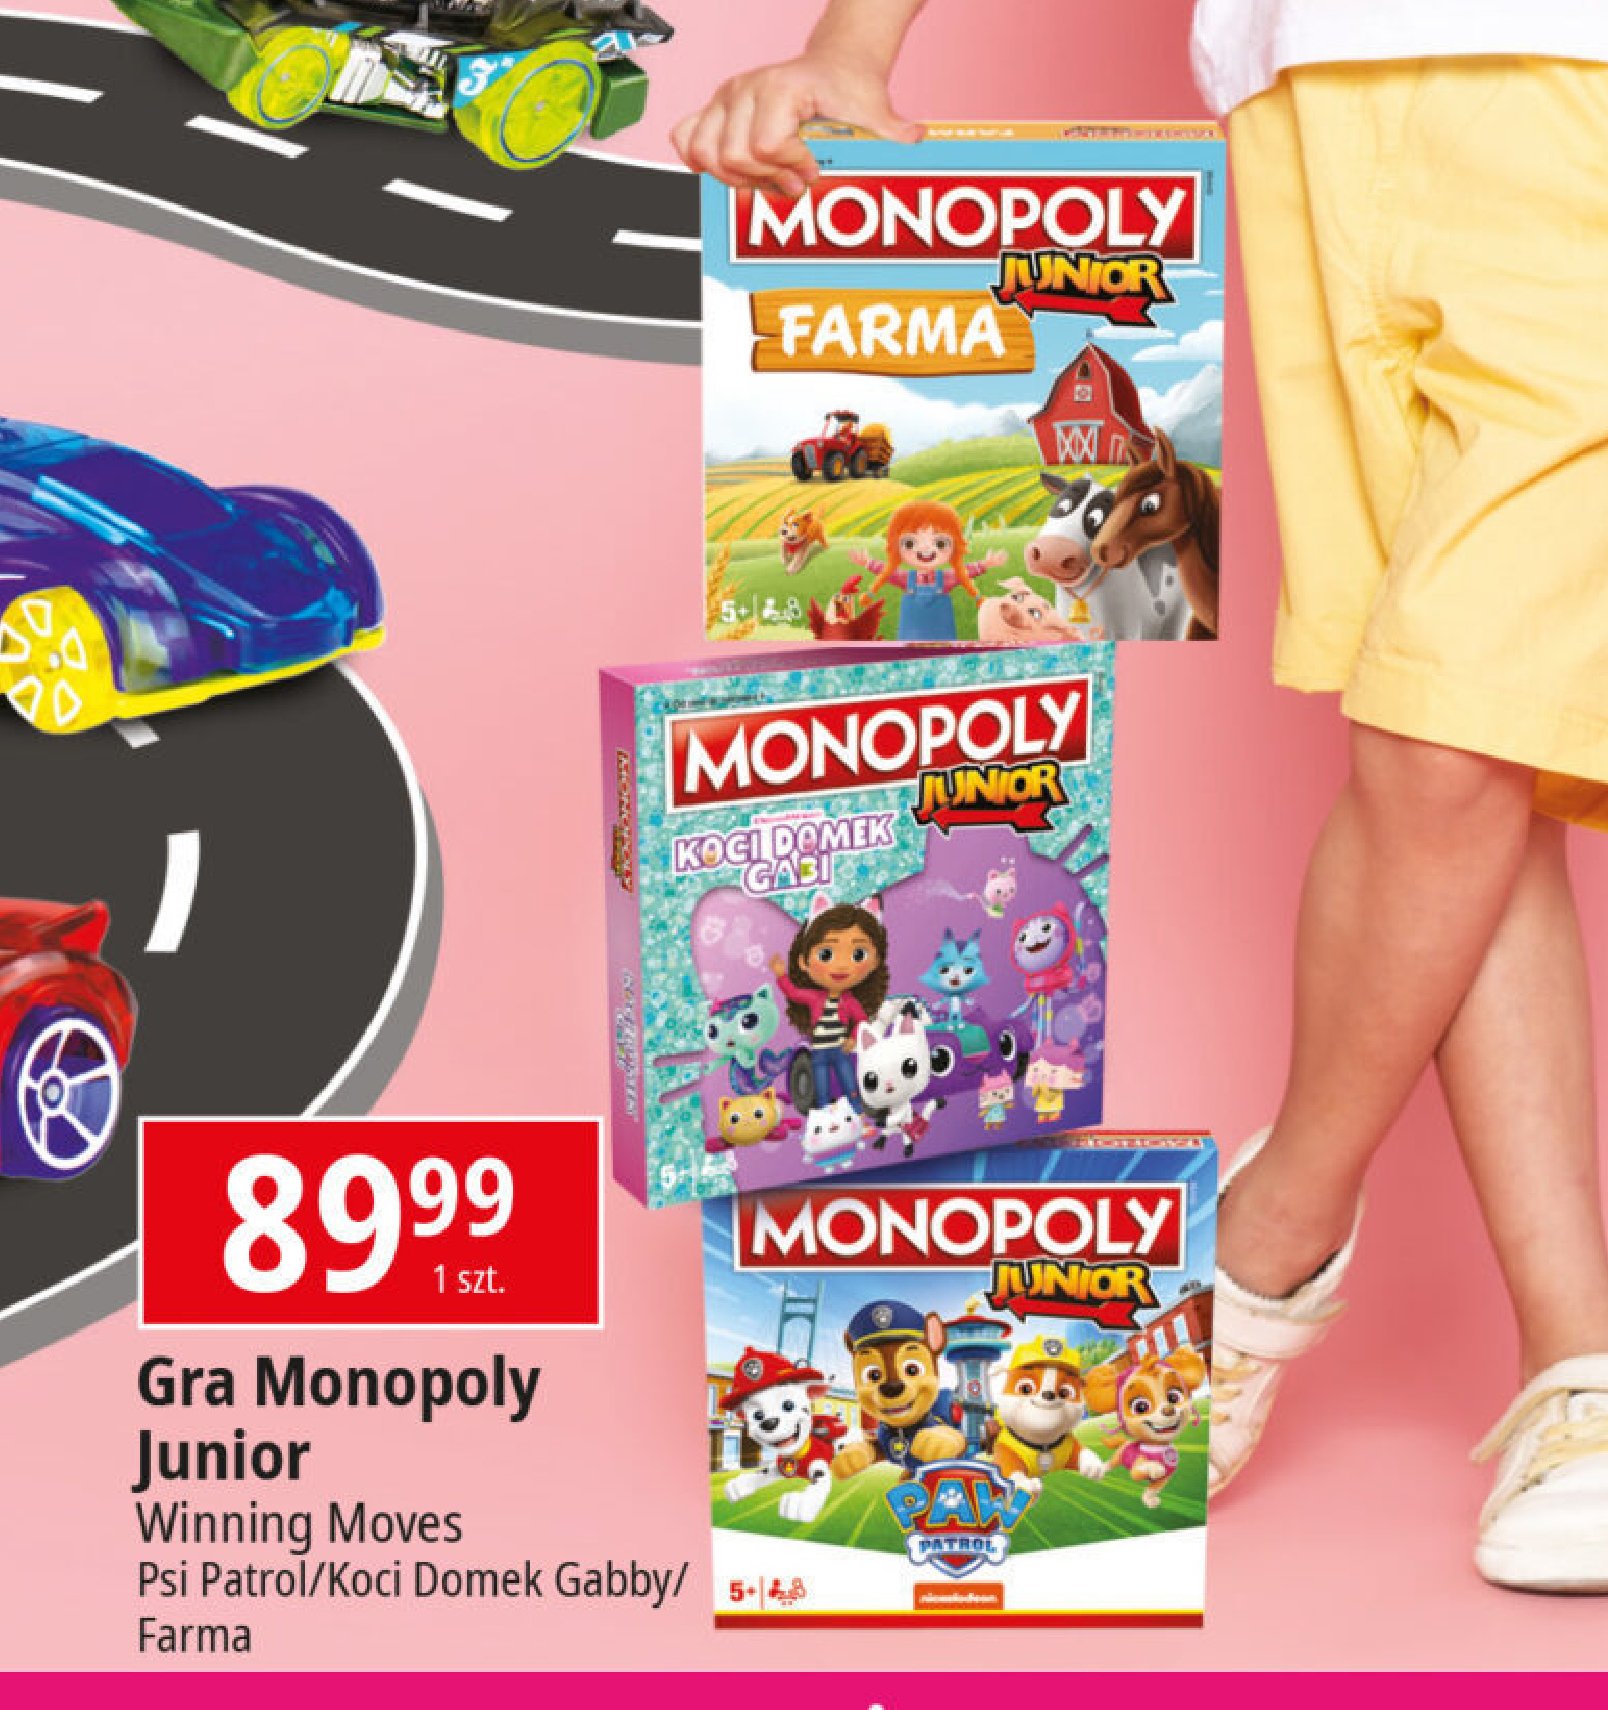 Gra monopoly junior psi patrol Hasbro promocja